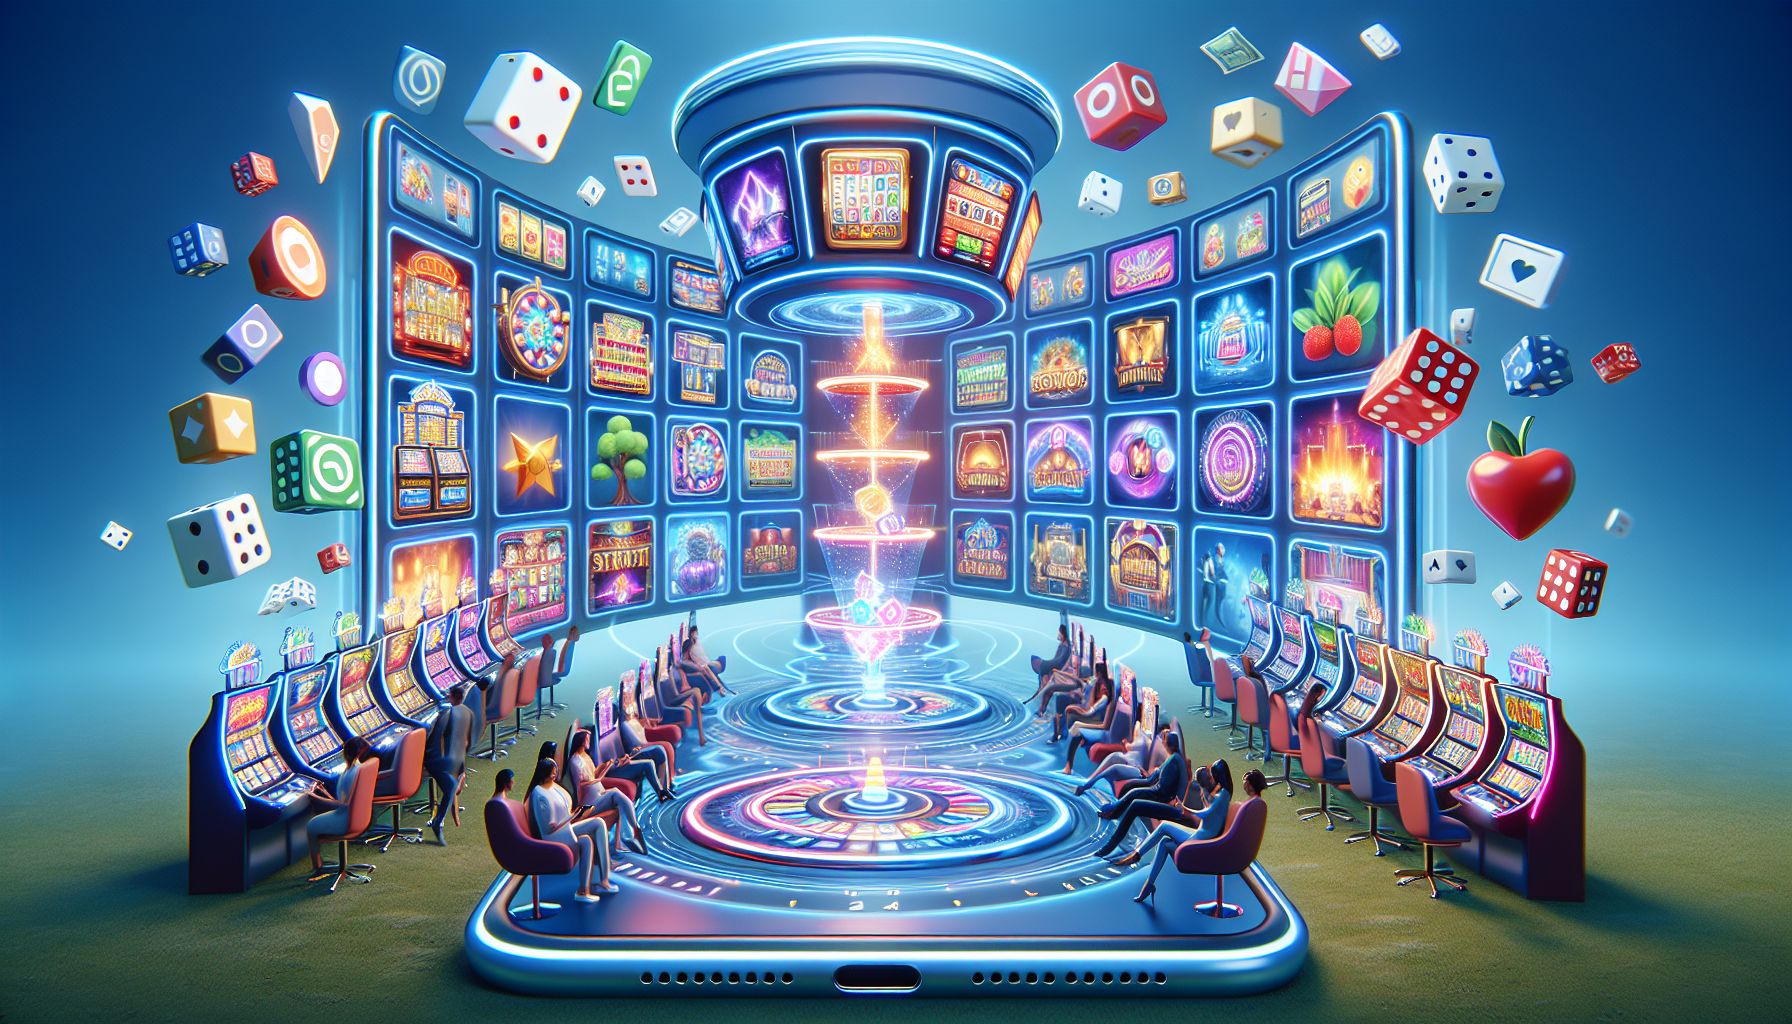 Dafar Situs Judi Slot Online Resmi No 1 24 Jam: The Ultimate Destination for Progressive Jackpot, Slotomania – Slot Machines, Mobile Gambling, Judi Online, and Game Kasino